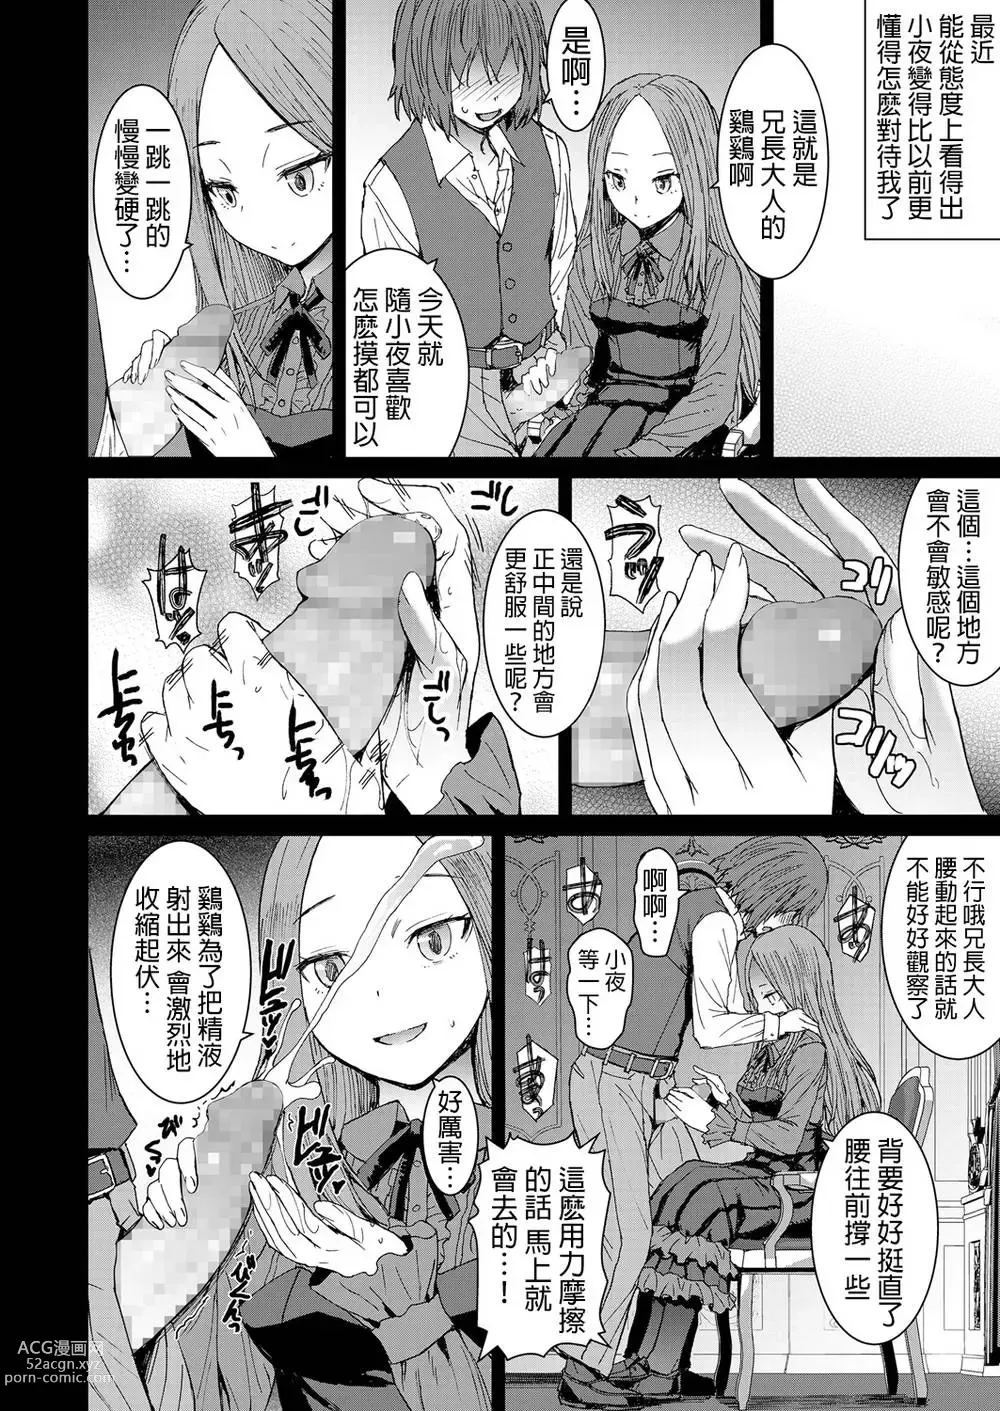 Page 14 of manga Aisarete Miru?